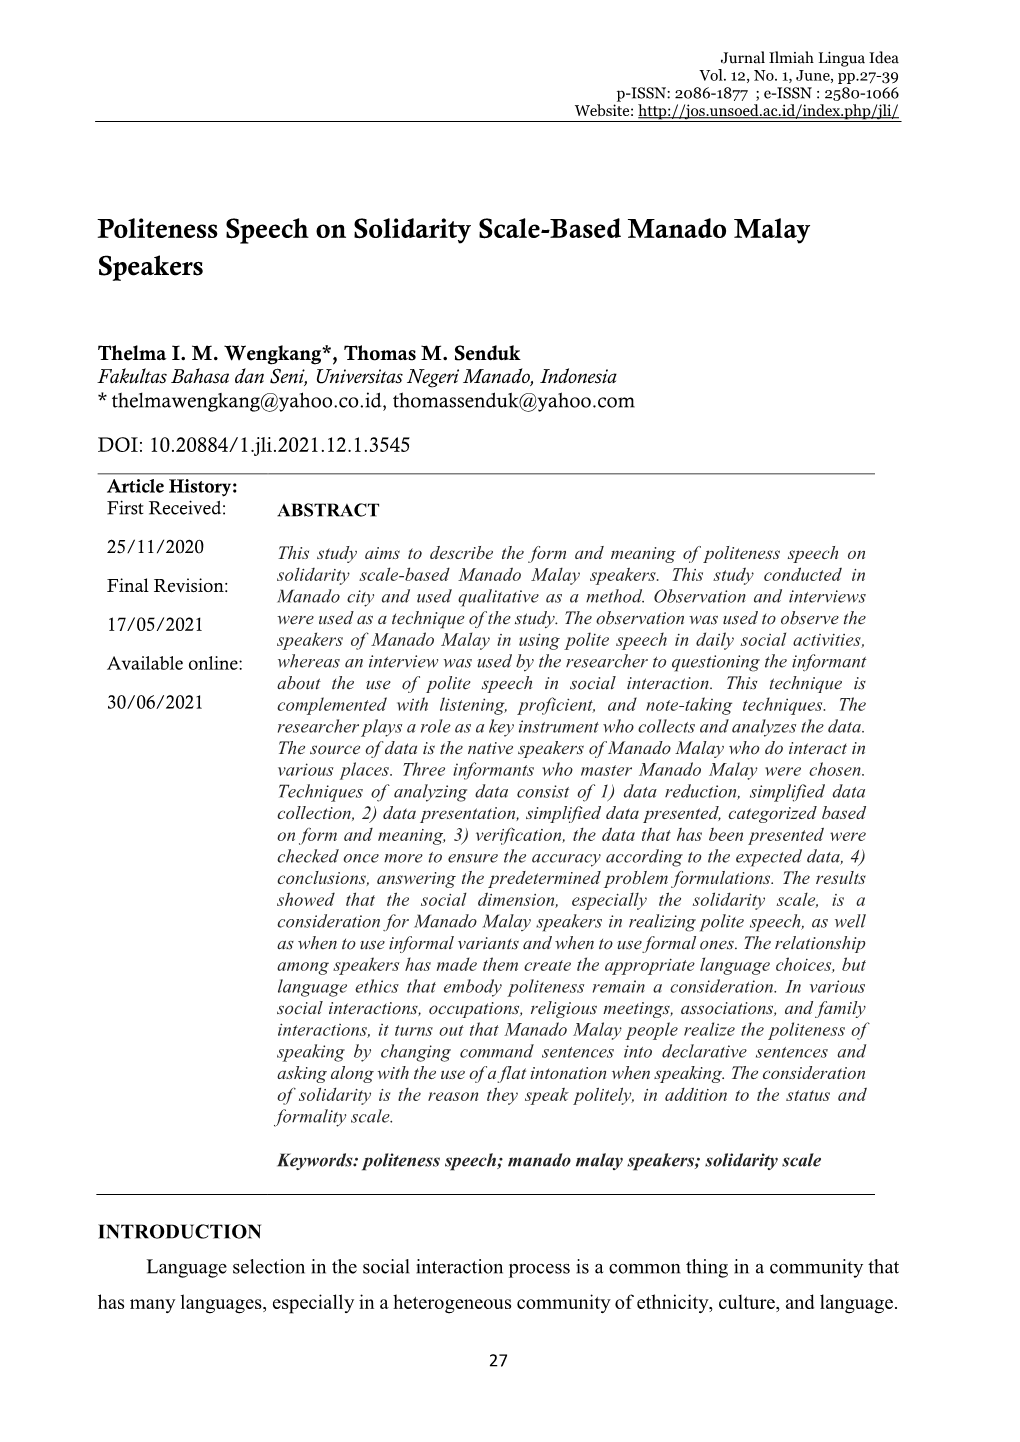 Politeness Speech on Solidarity Scale-Based Manado Malay Speakers